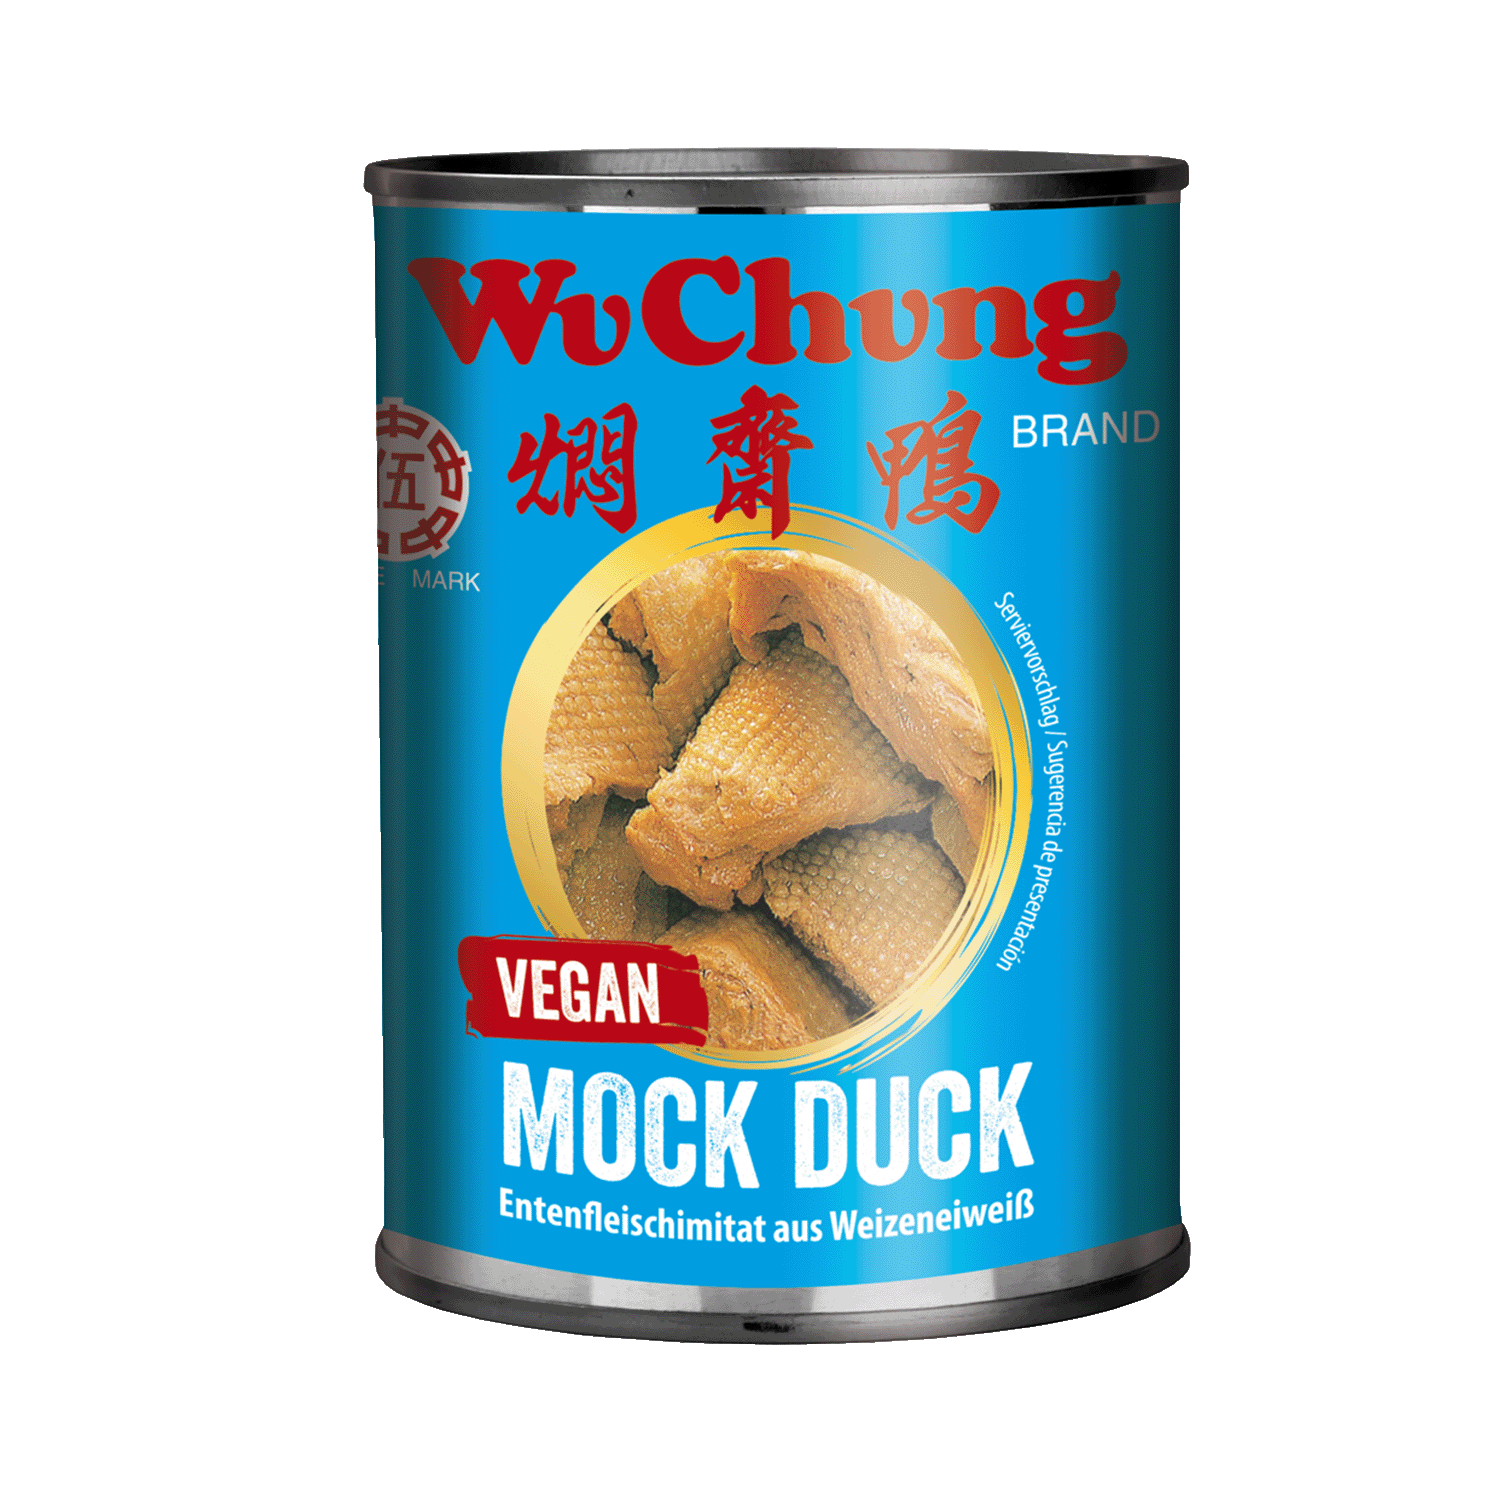 Vegan Mock Duck, 280g